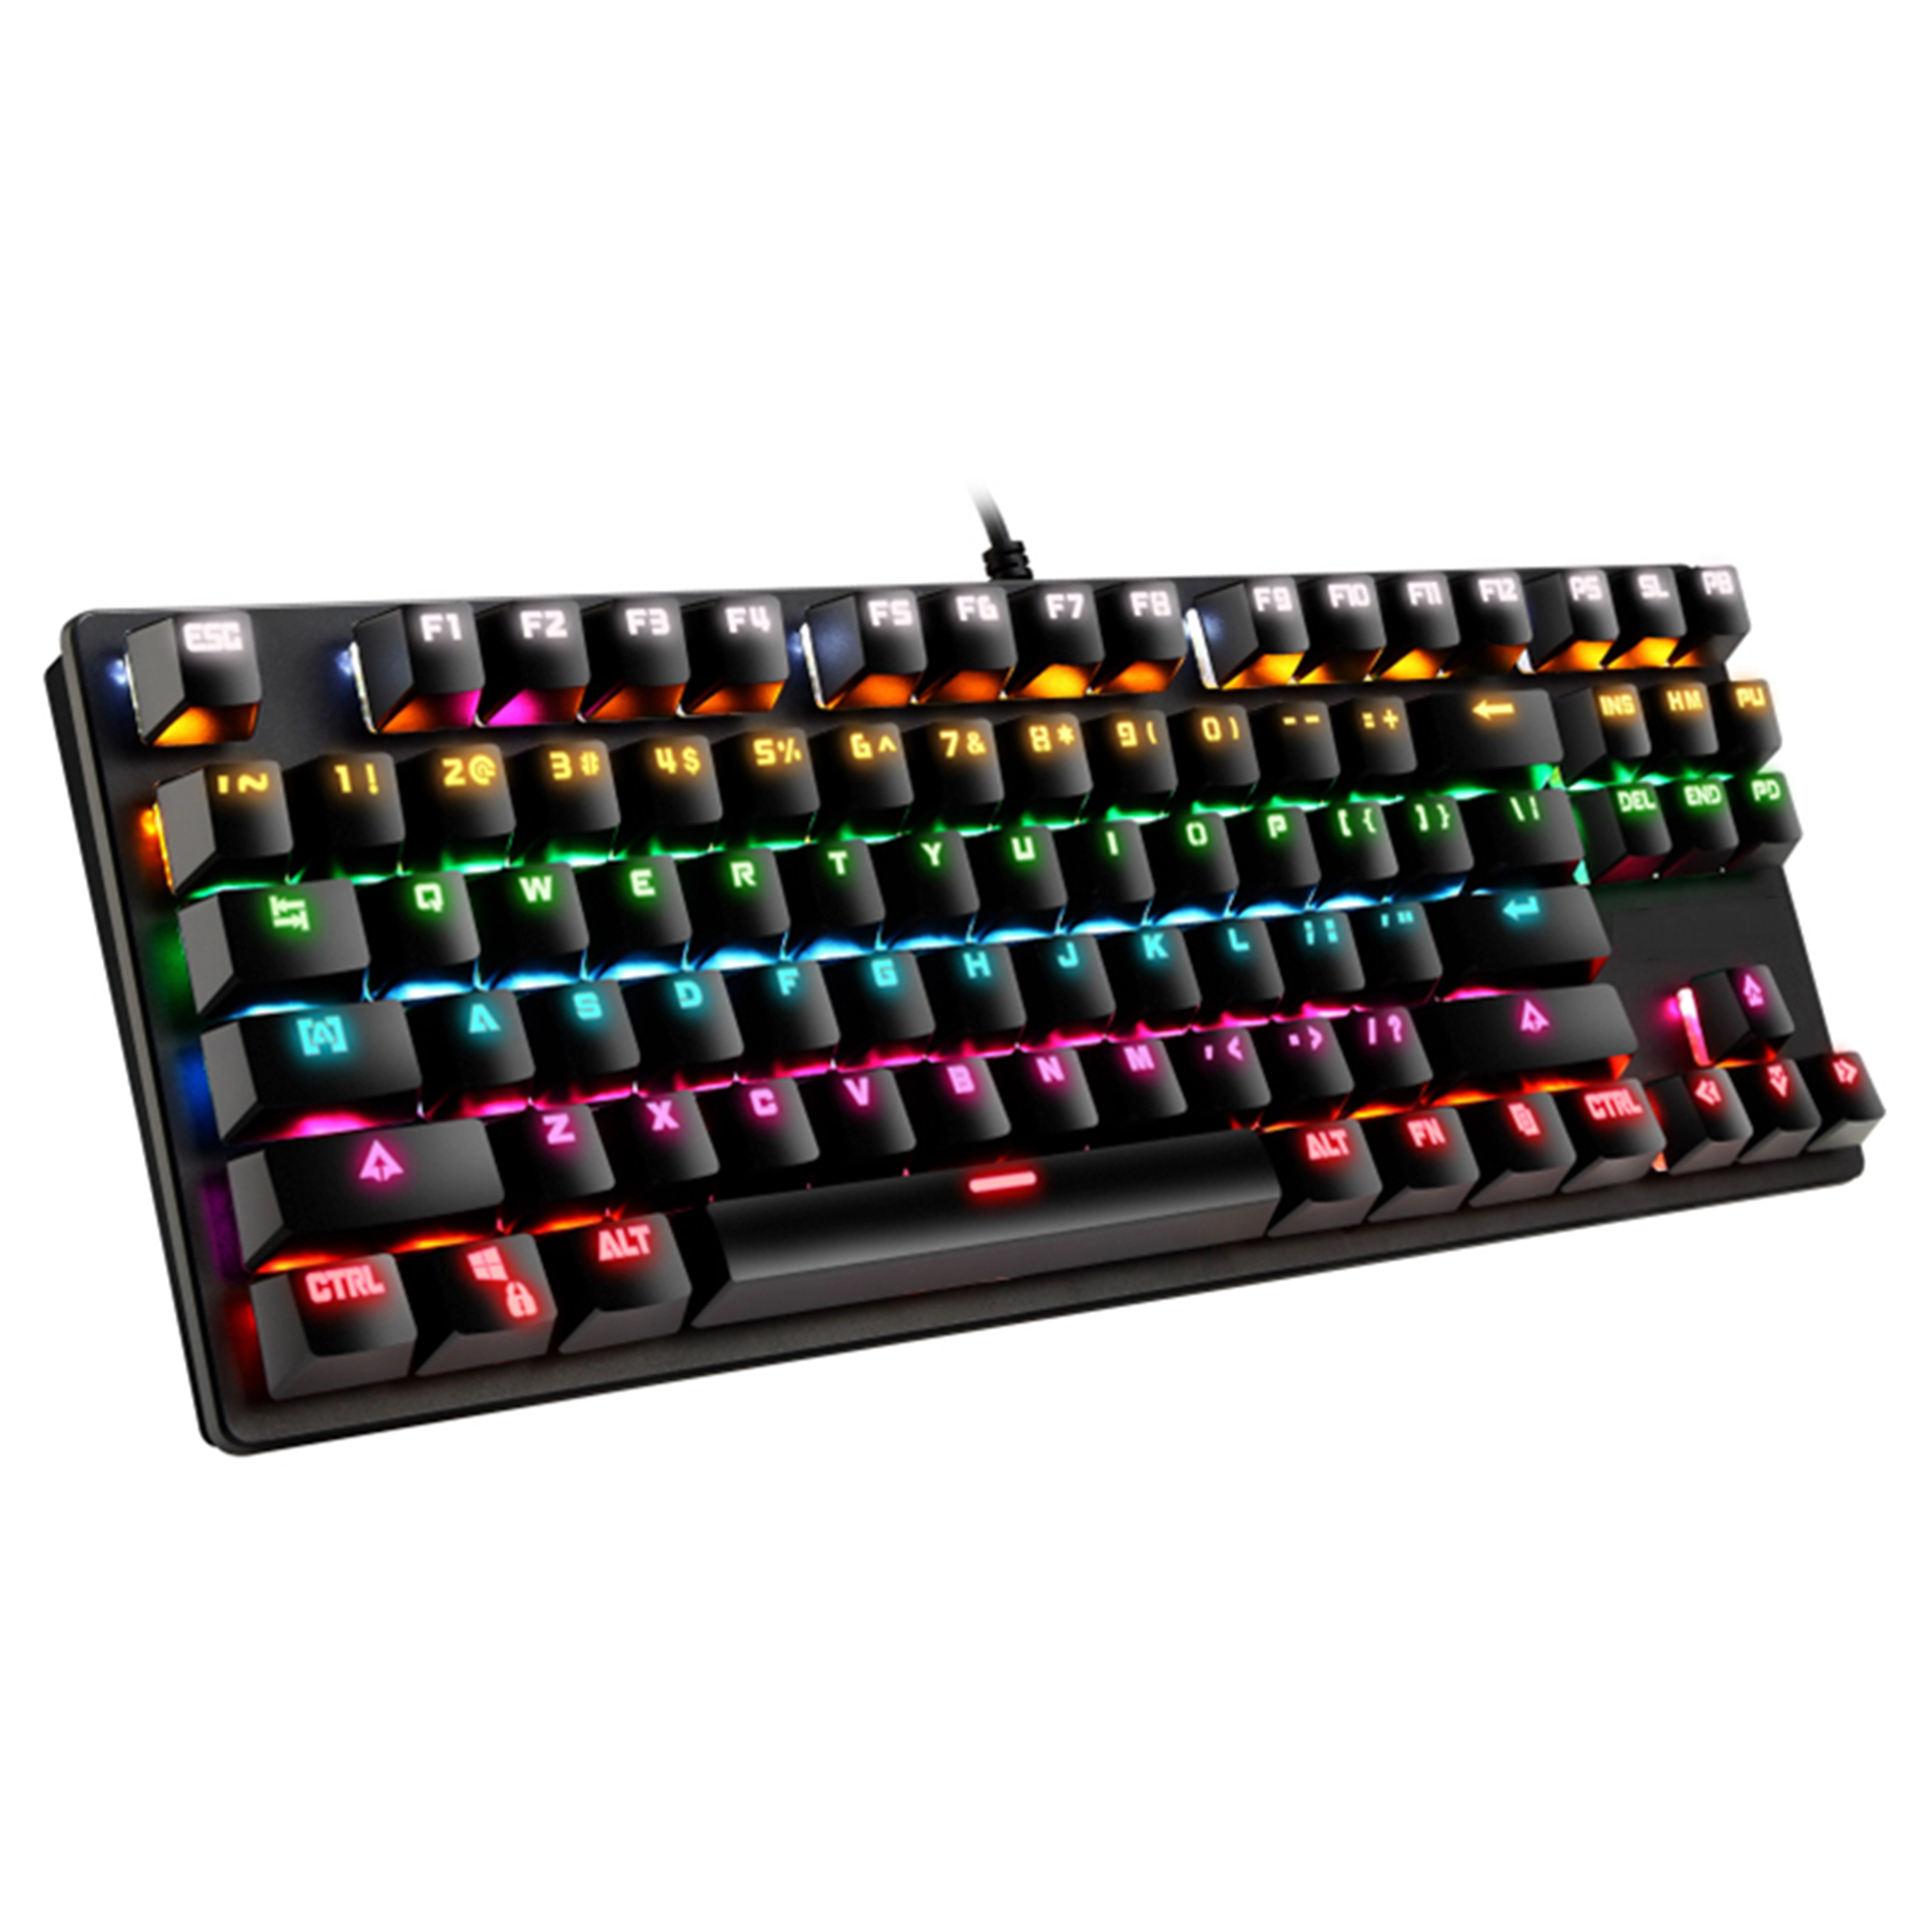 Hot Selling Good Quality Numeric Keyboard Pink USB Wired Rgb Mechanical Keyboard